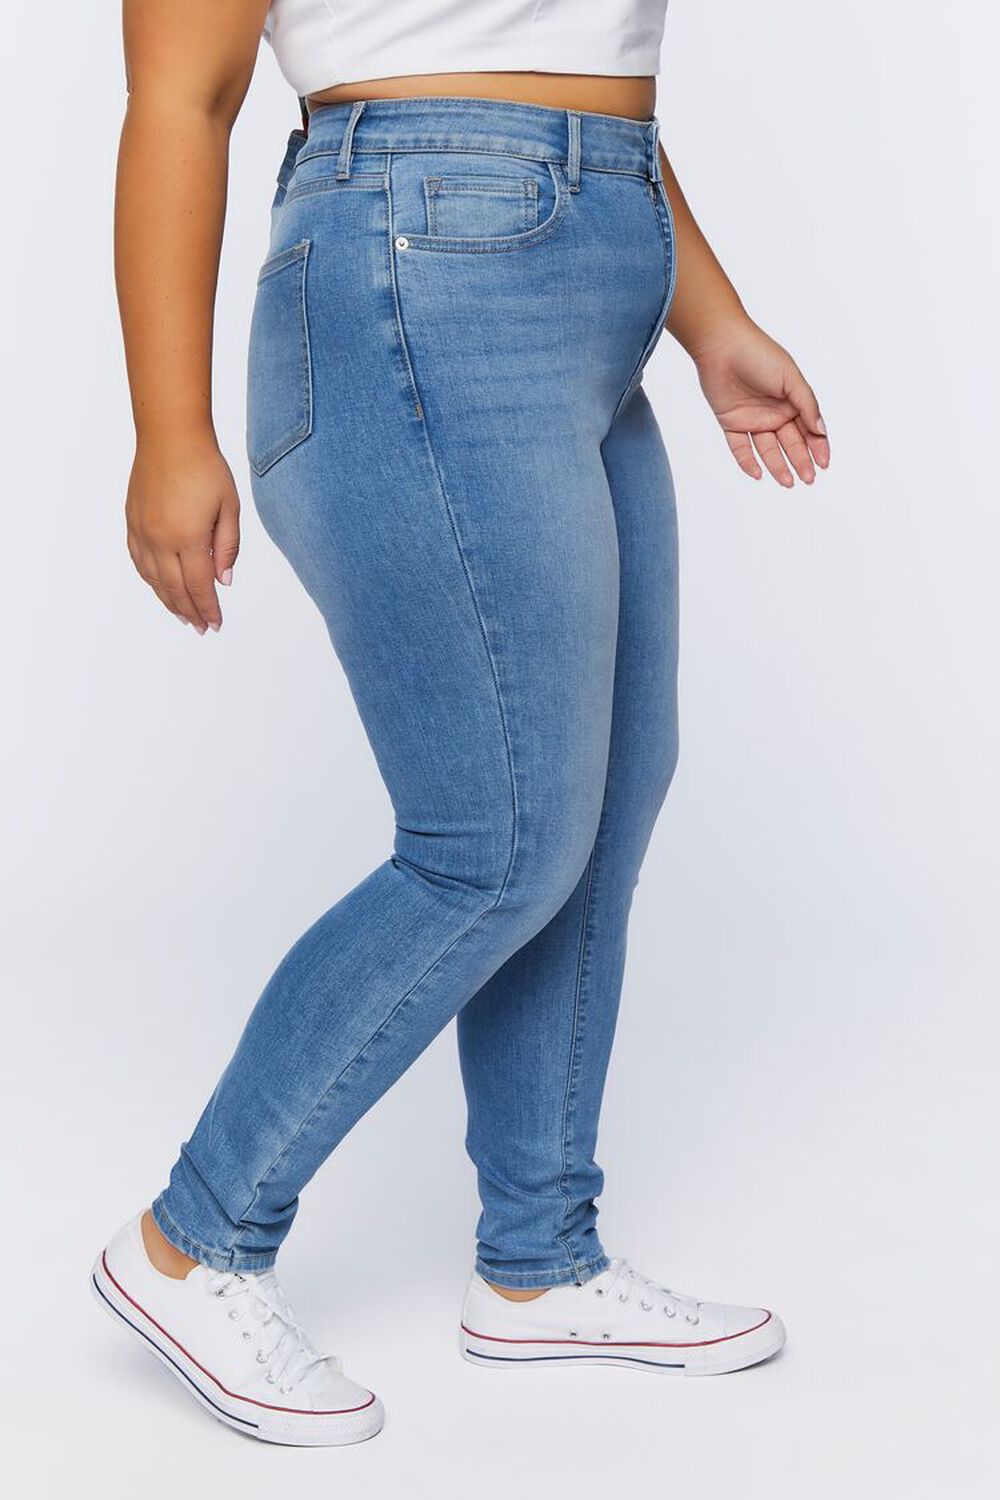 MEDIUM DENIM Plus Size High-Rise Skinny Jeans, image 3